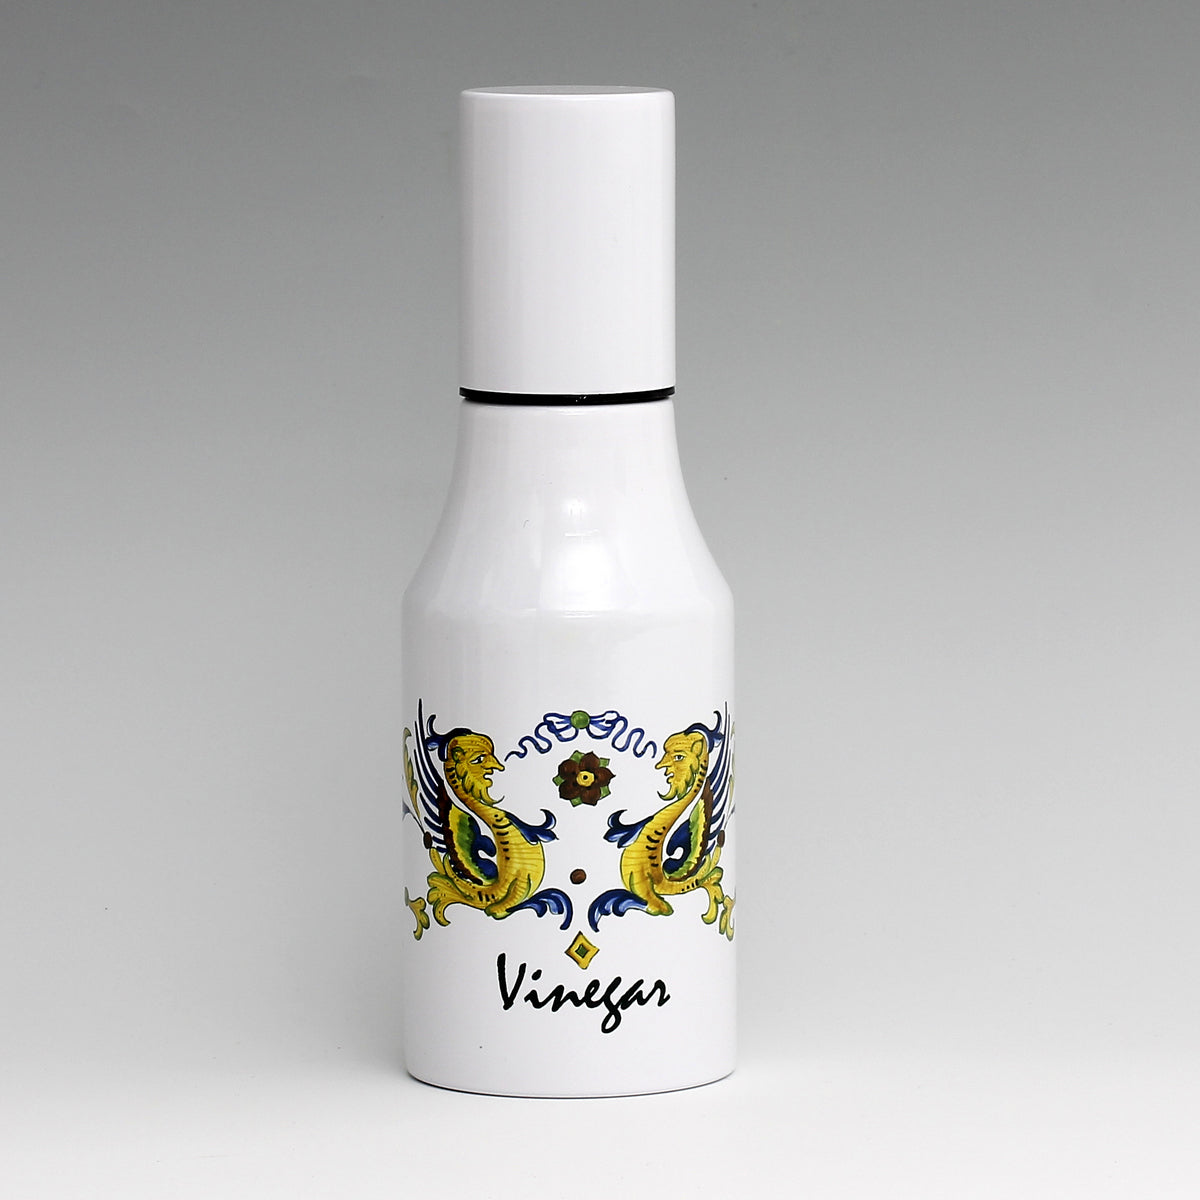 SUBLIMART: Vinegar Dispenser with non-drip pourer and dust cover cap (Deruta Design 03V)